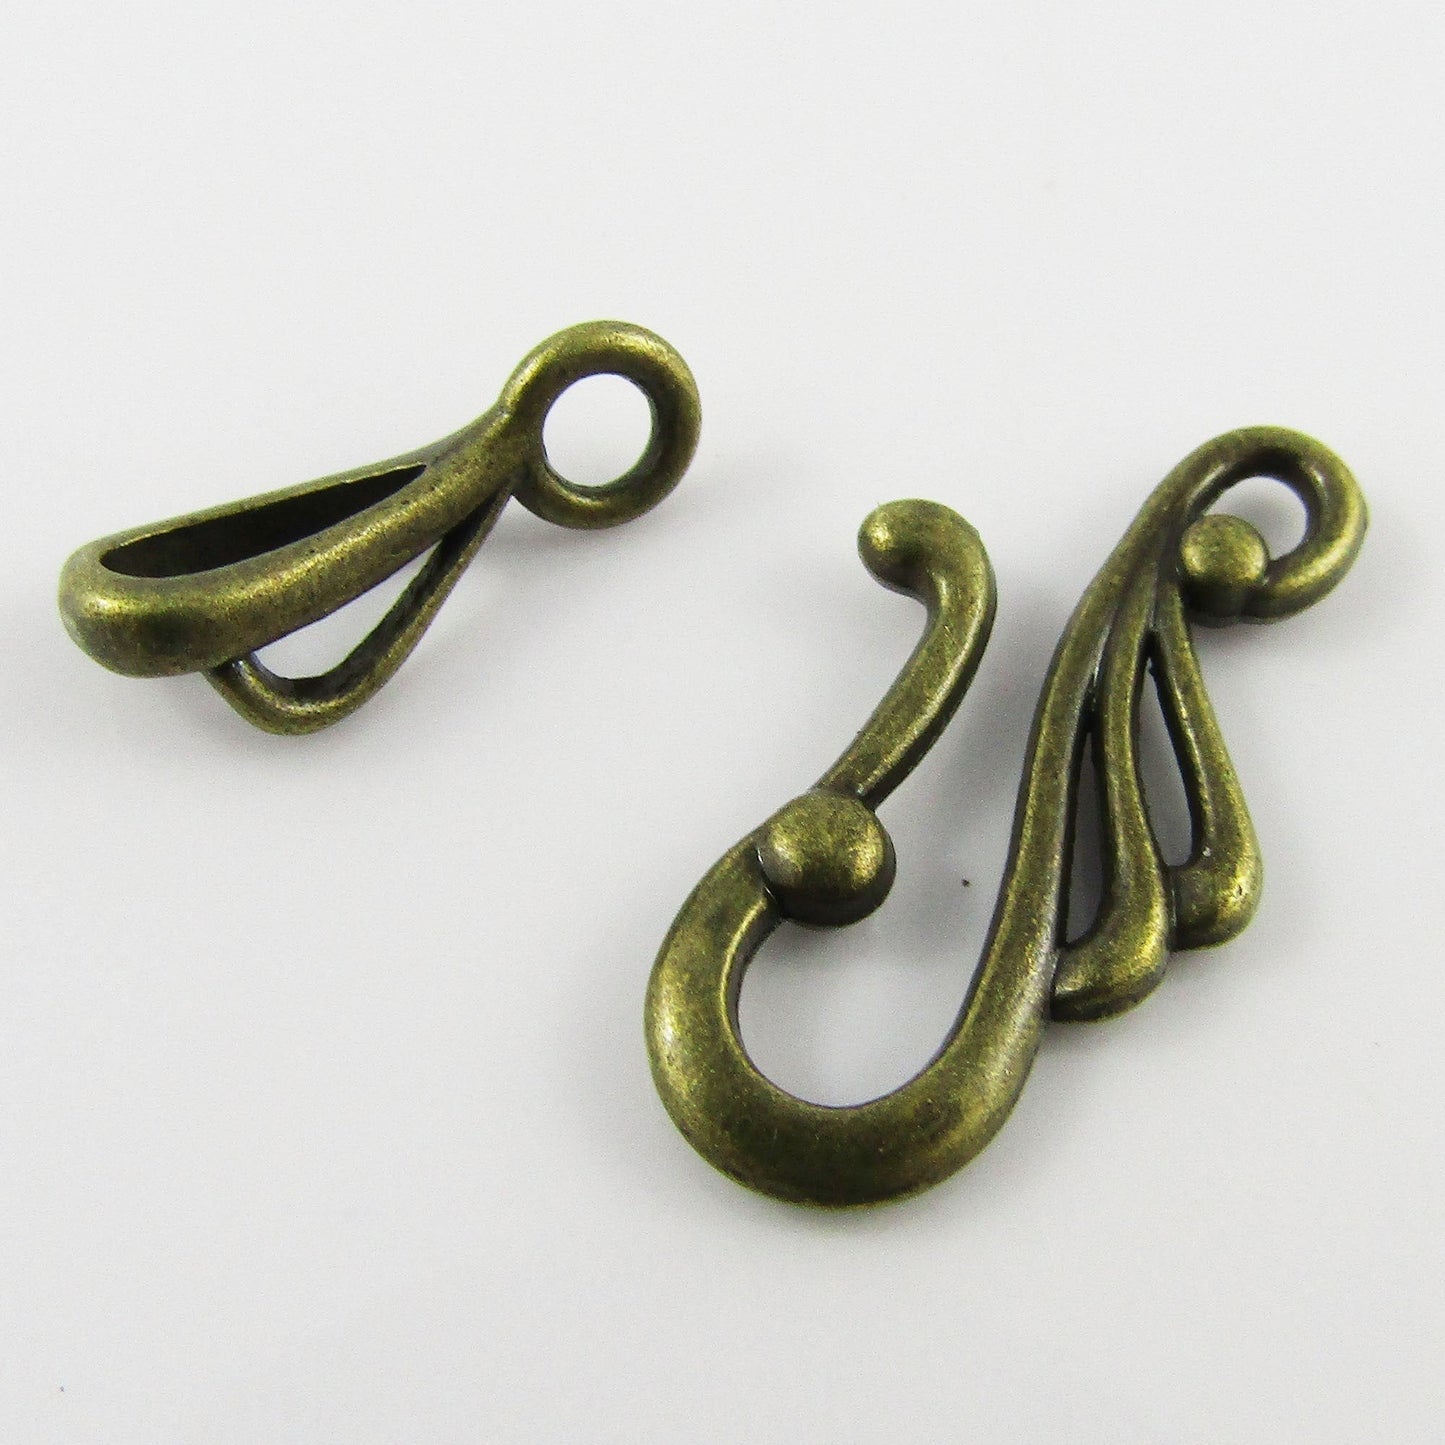 Bulk 10 sets DIY Flourish Toggle Clasp Finding Hook & Eye 25x14mm Antique Bronze